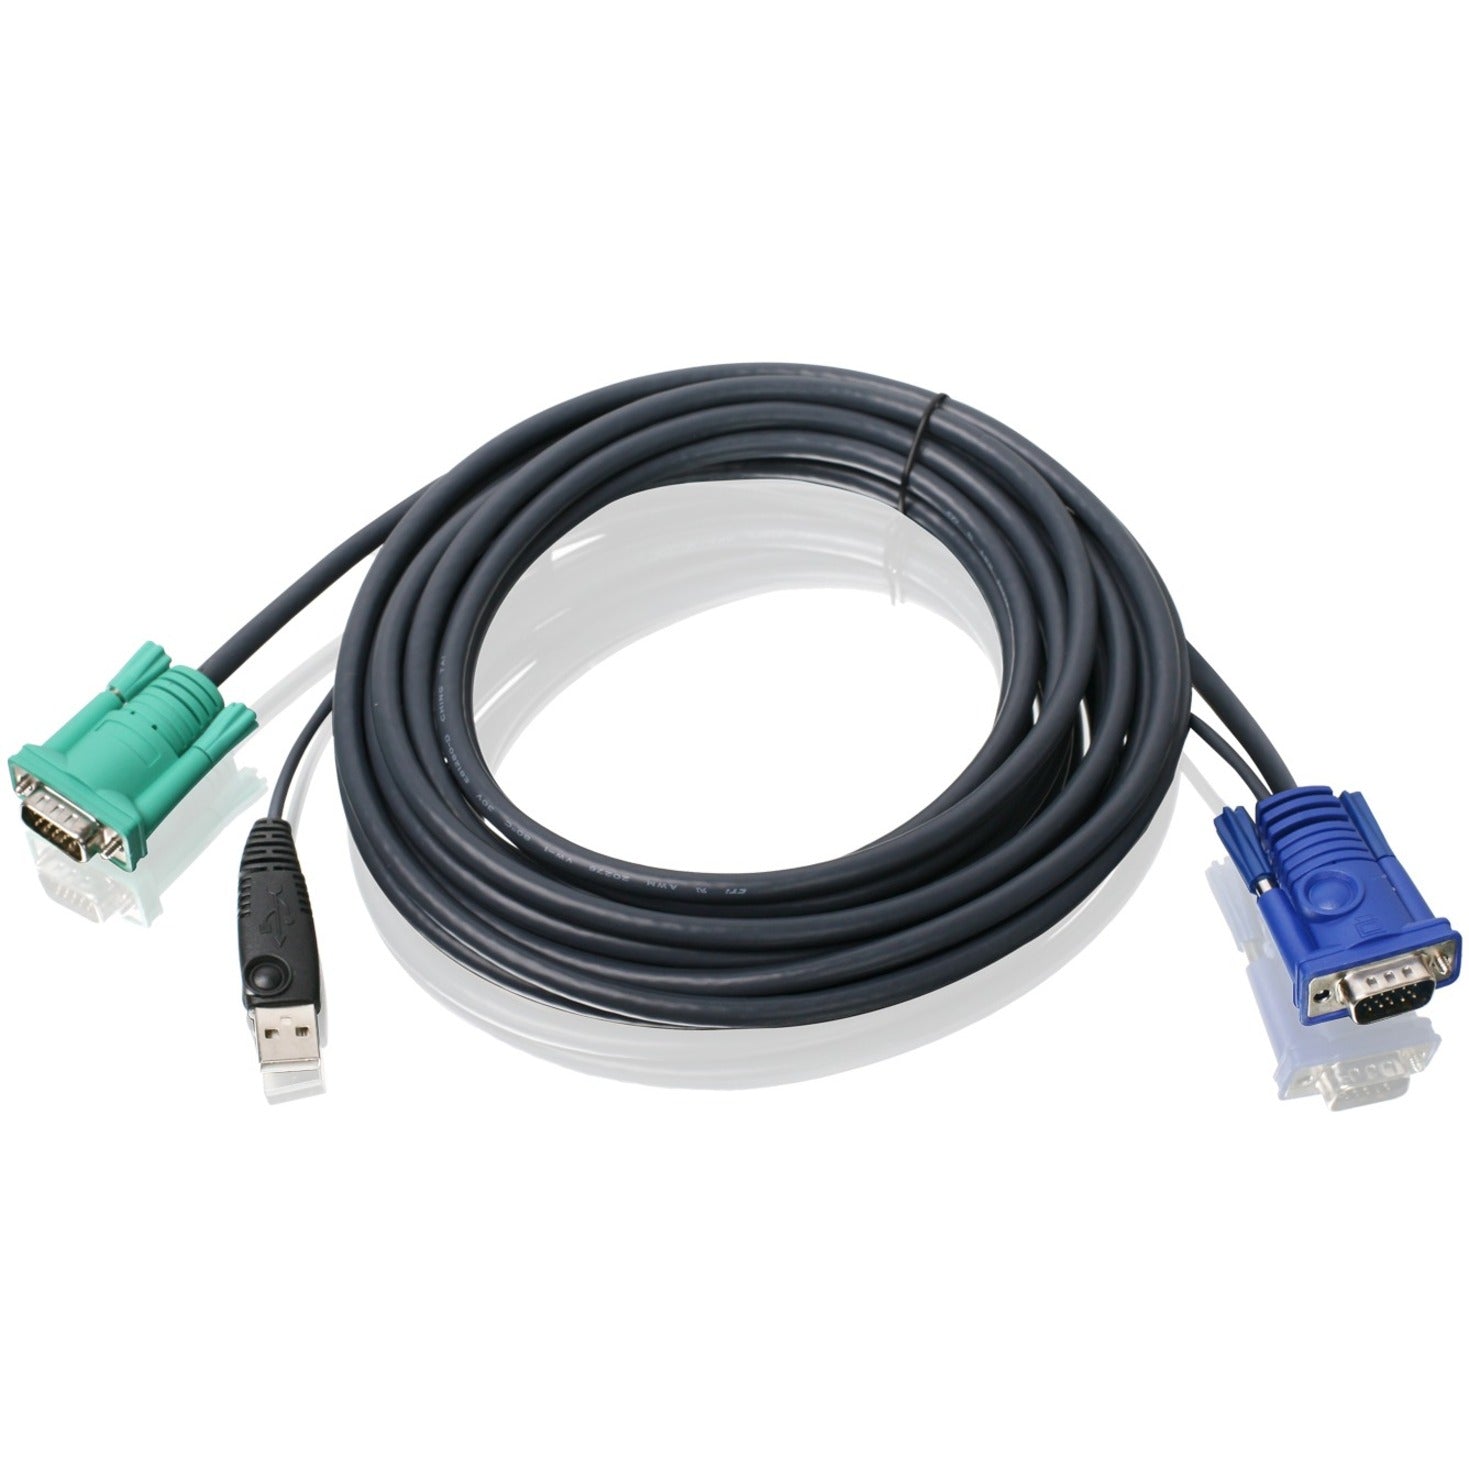 IOGEAR G2L5205U USB KVM Cable 16 Ft - Flexible, EMI/RF Protection, Corrosion Resistant, Black